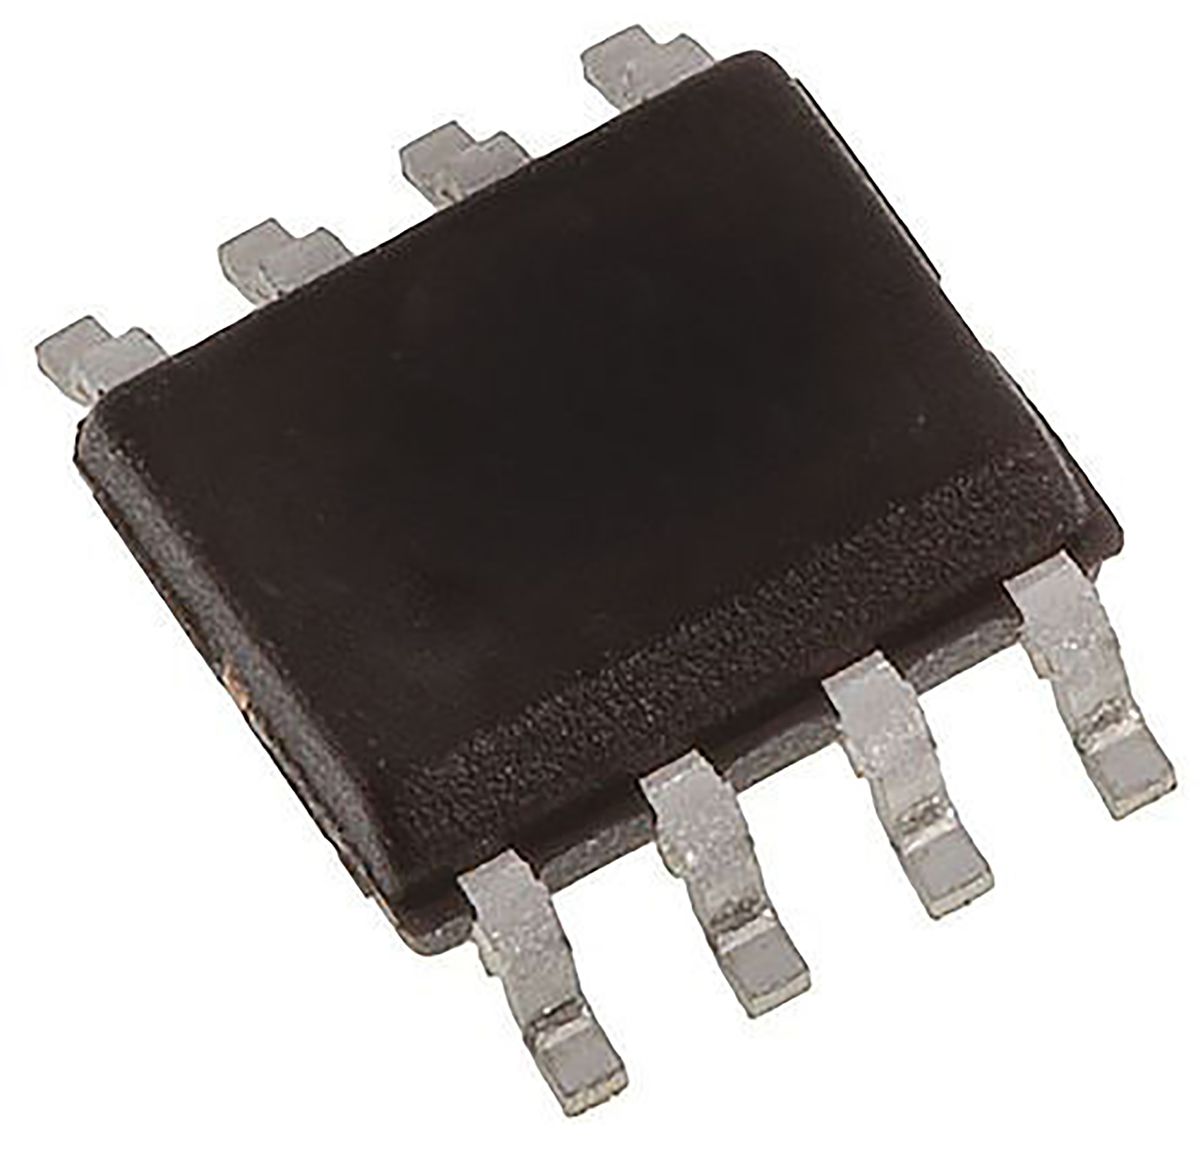 X9313WSZ, Digital Potentiometer 10kΩ 32-Position Linear Serial-3 Wire 8 Pin, SOIC